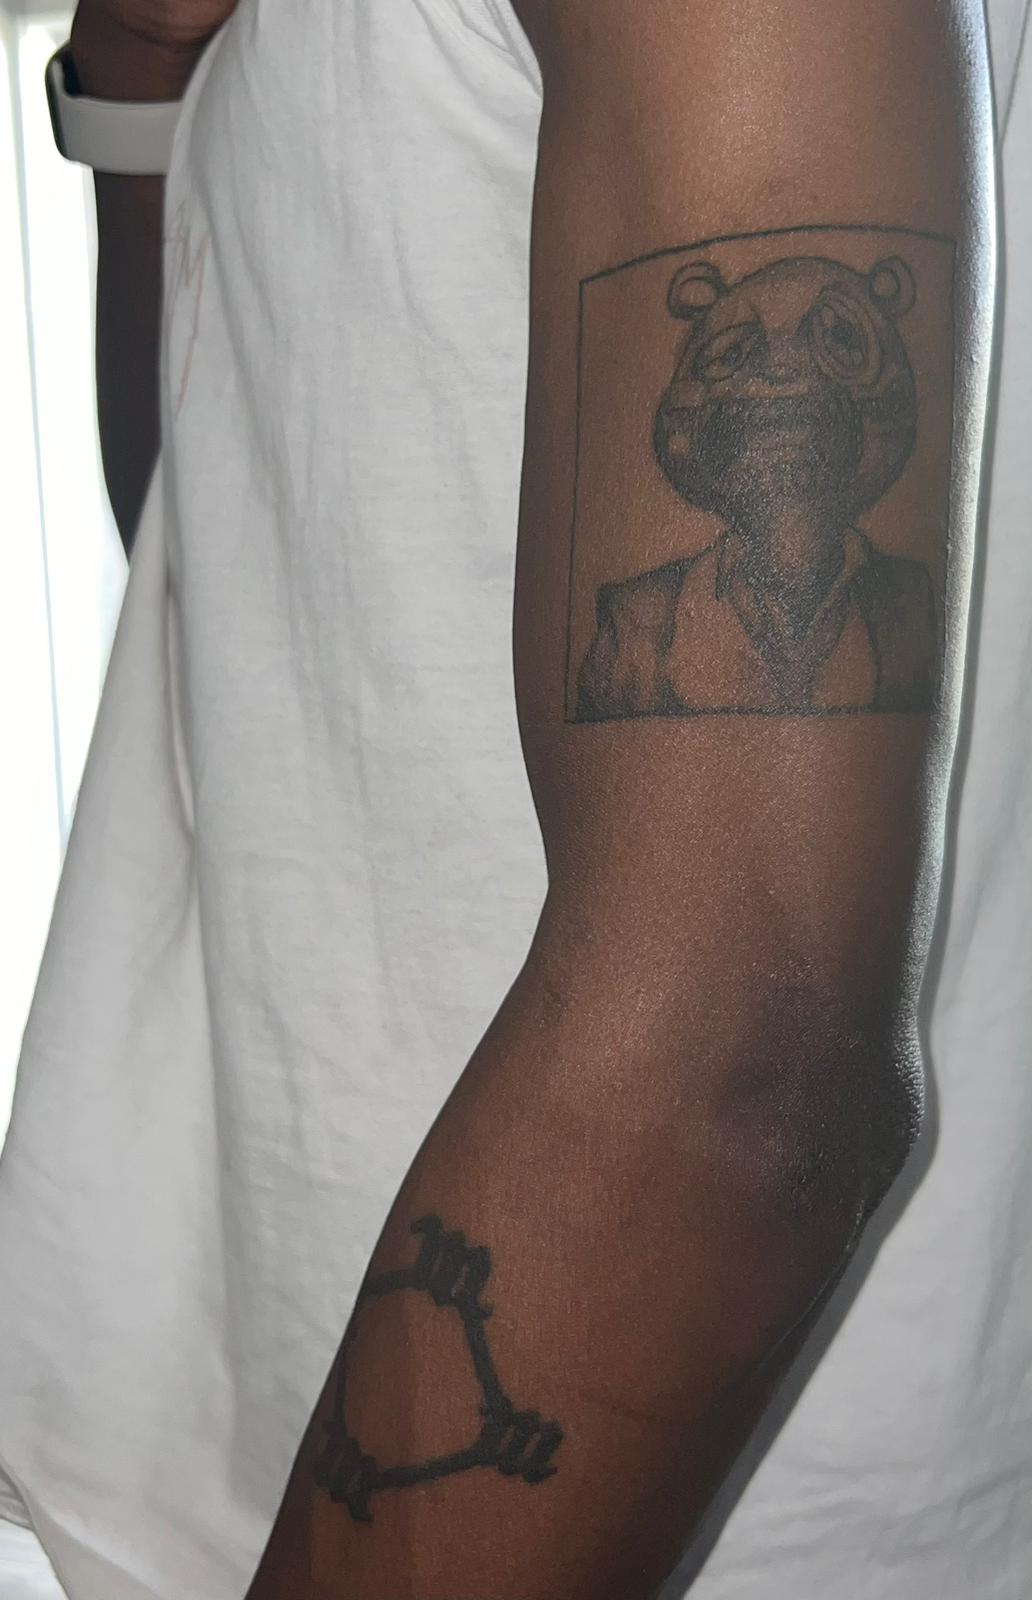 Kanye West's Girlfriend Chaney Jones Gets 'Ye' Tattoo on Wrist